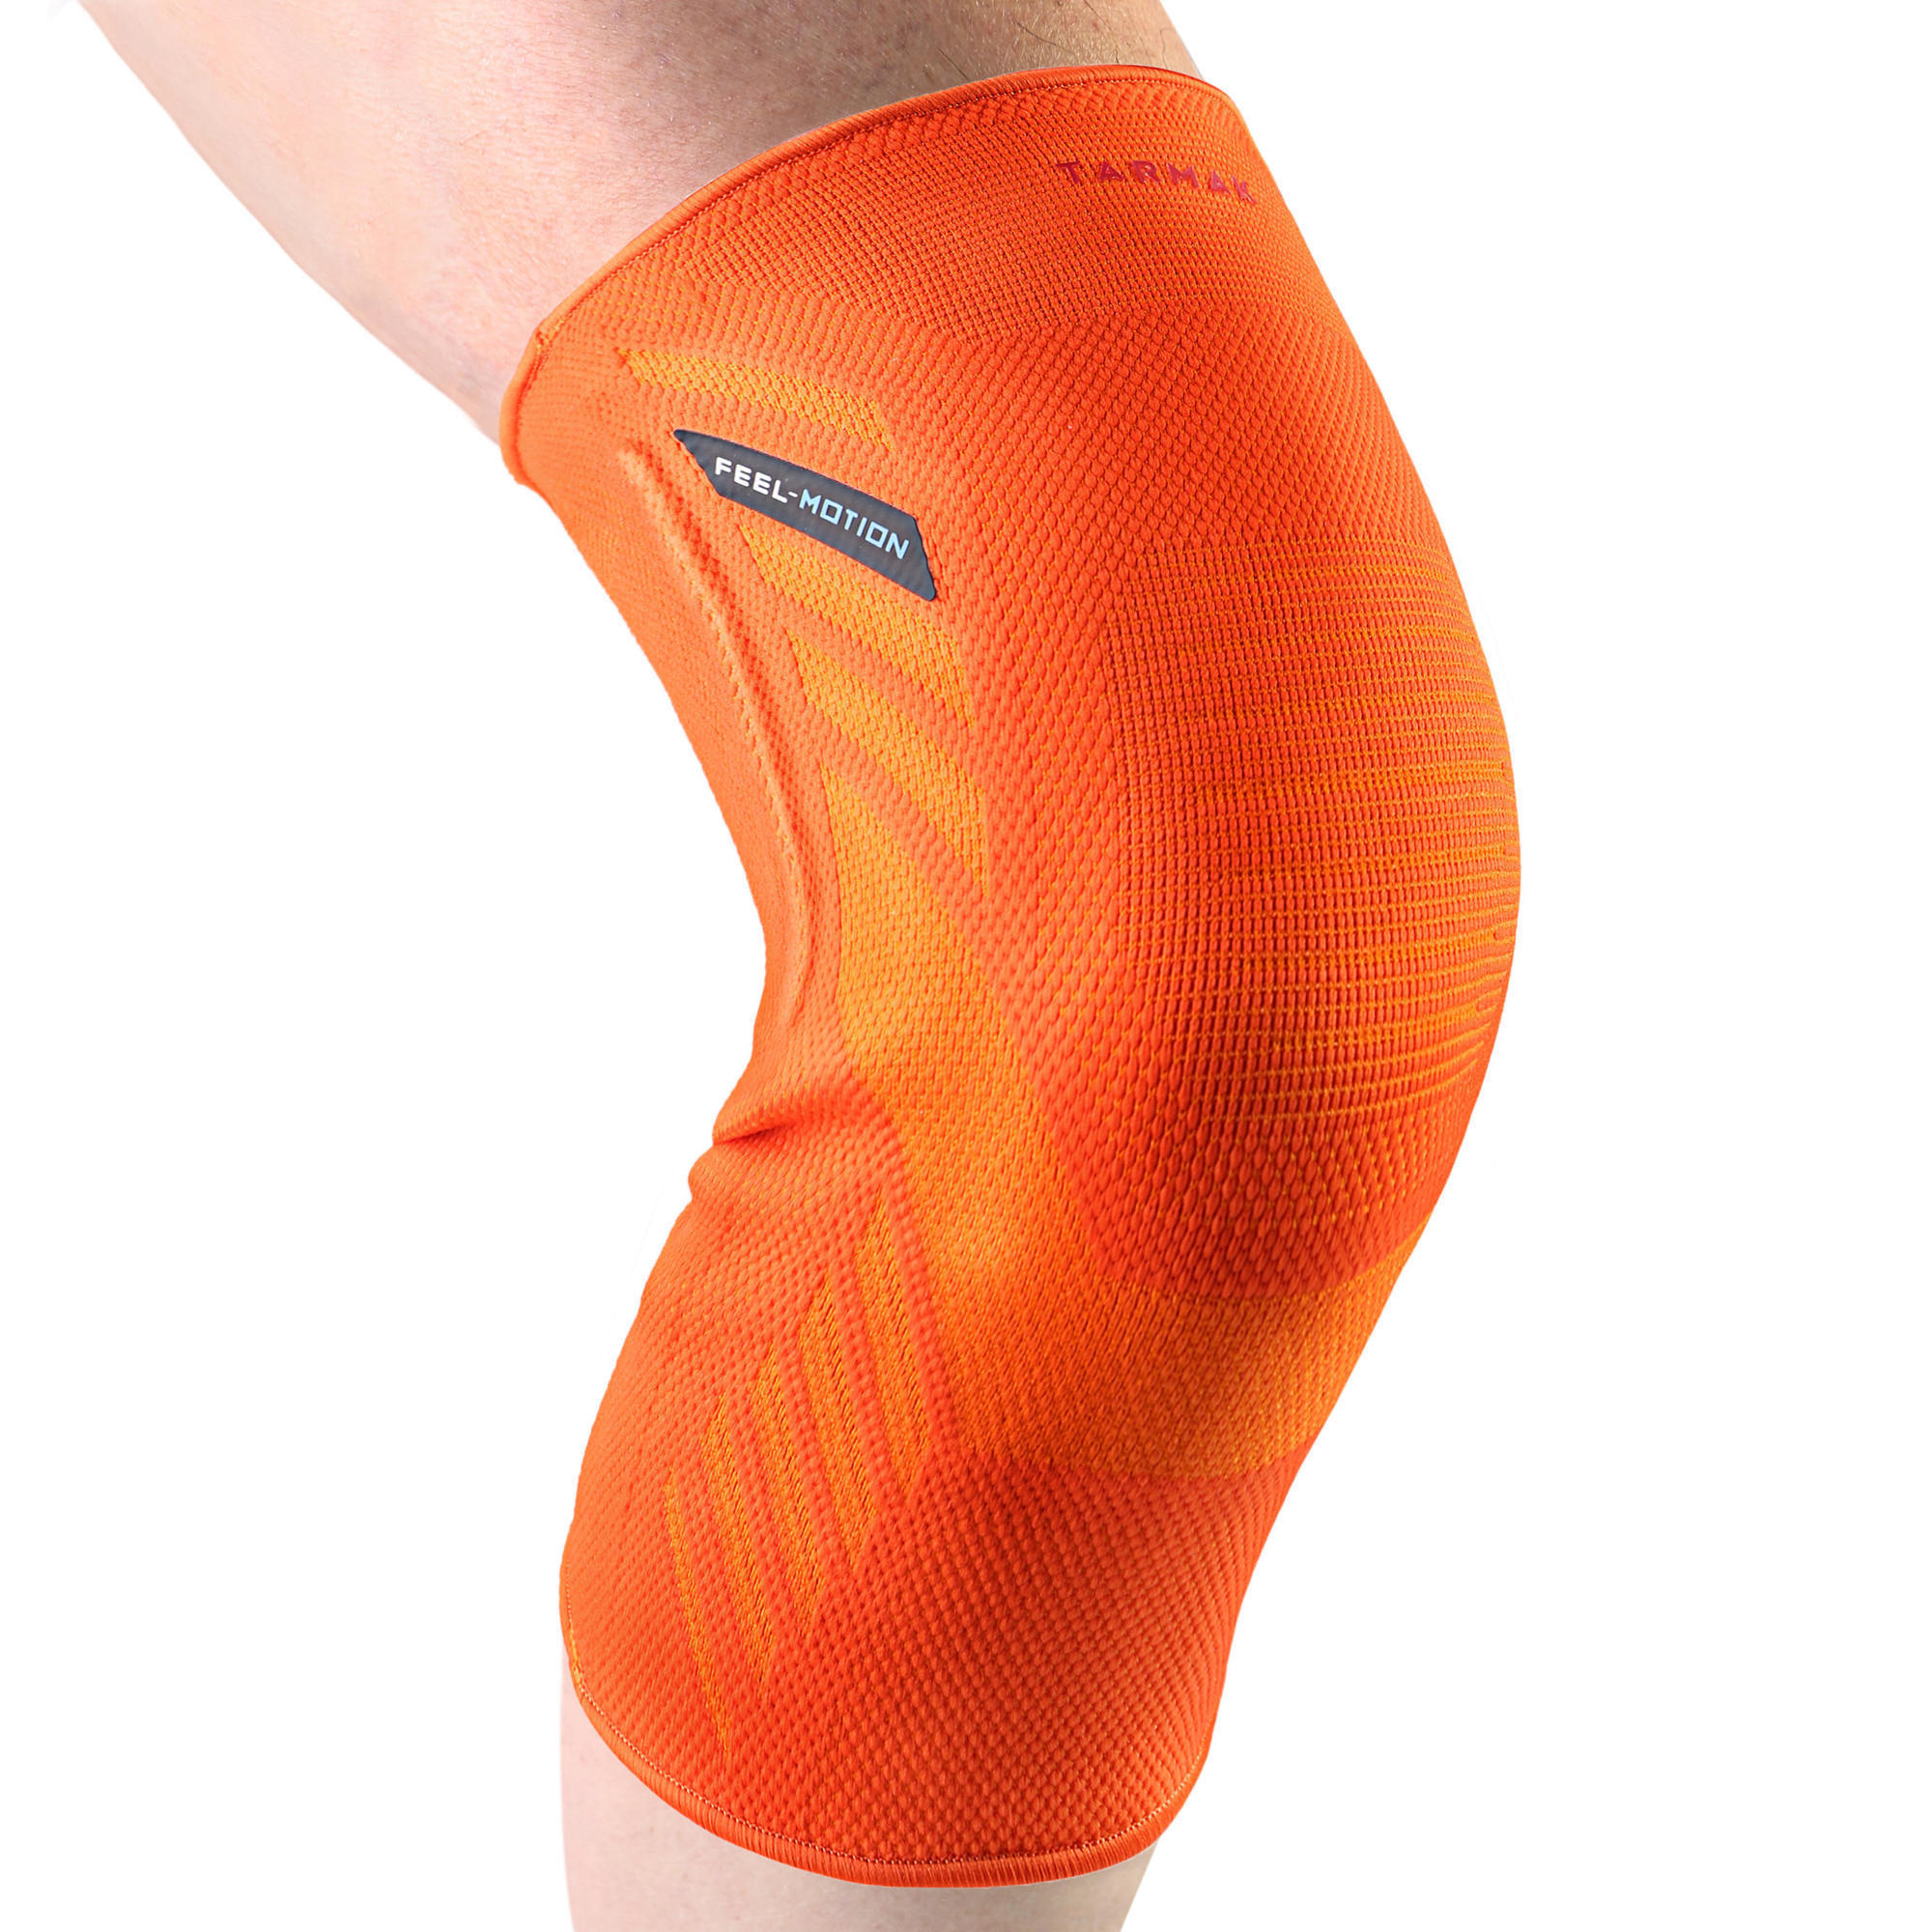 knee support for running decathlon